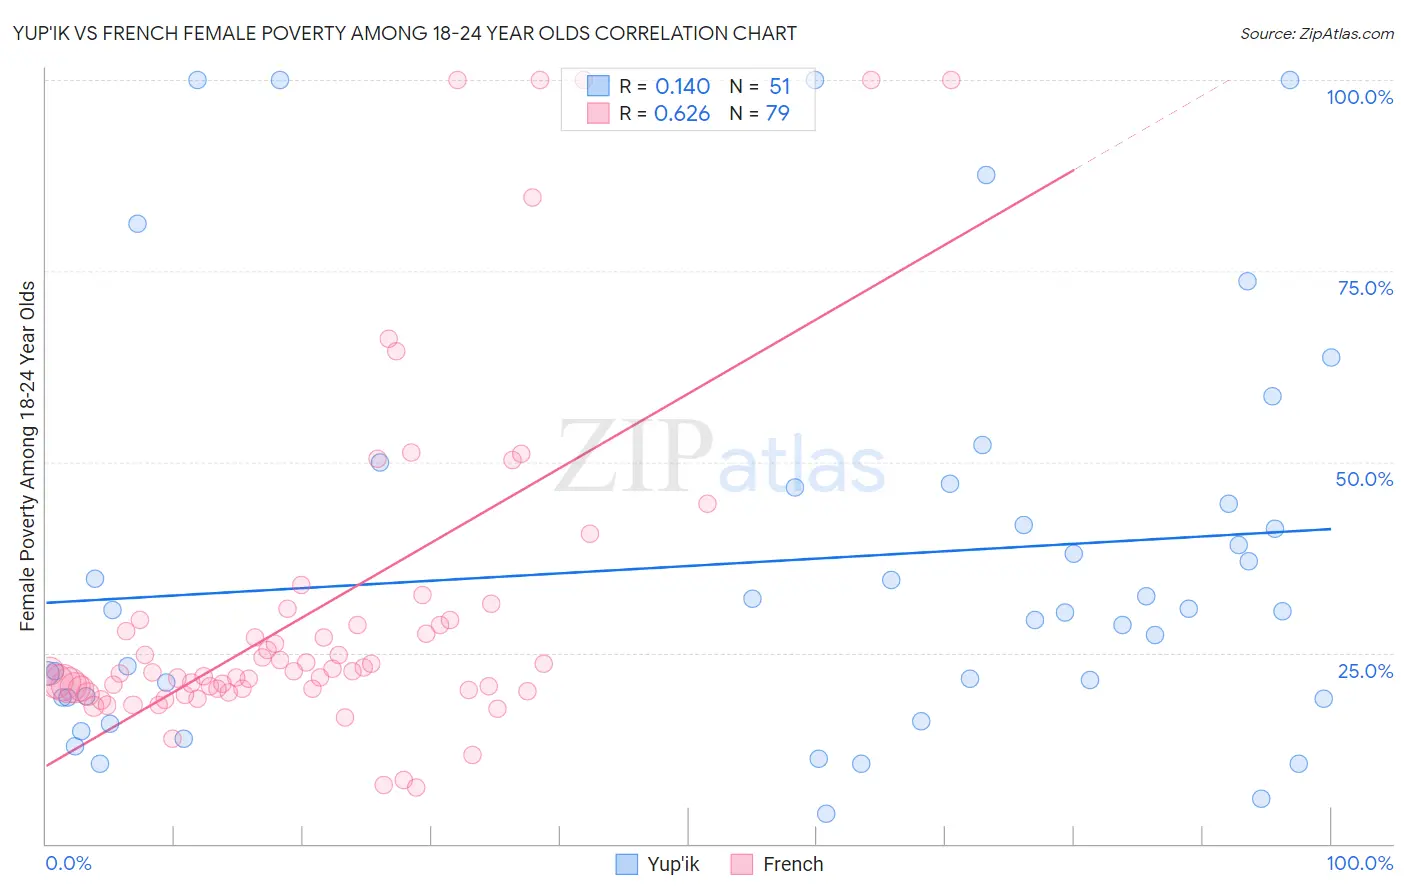 Yup'ik vs French Female Poverty Among 18-24 Year Olds